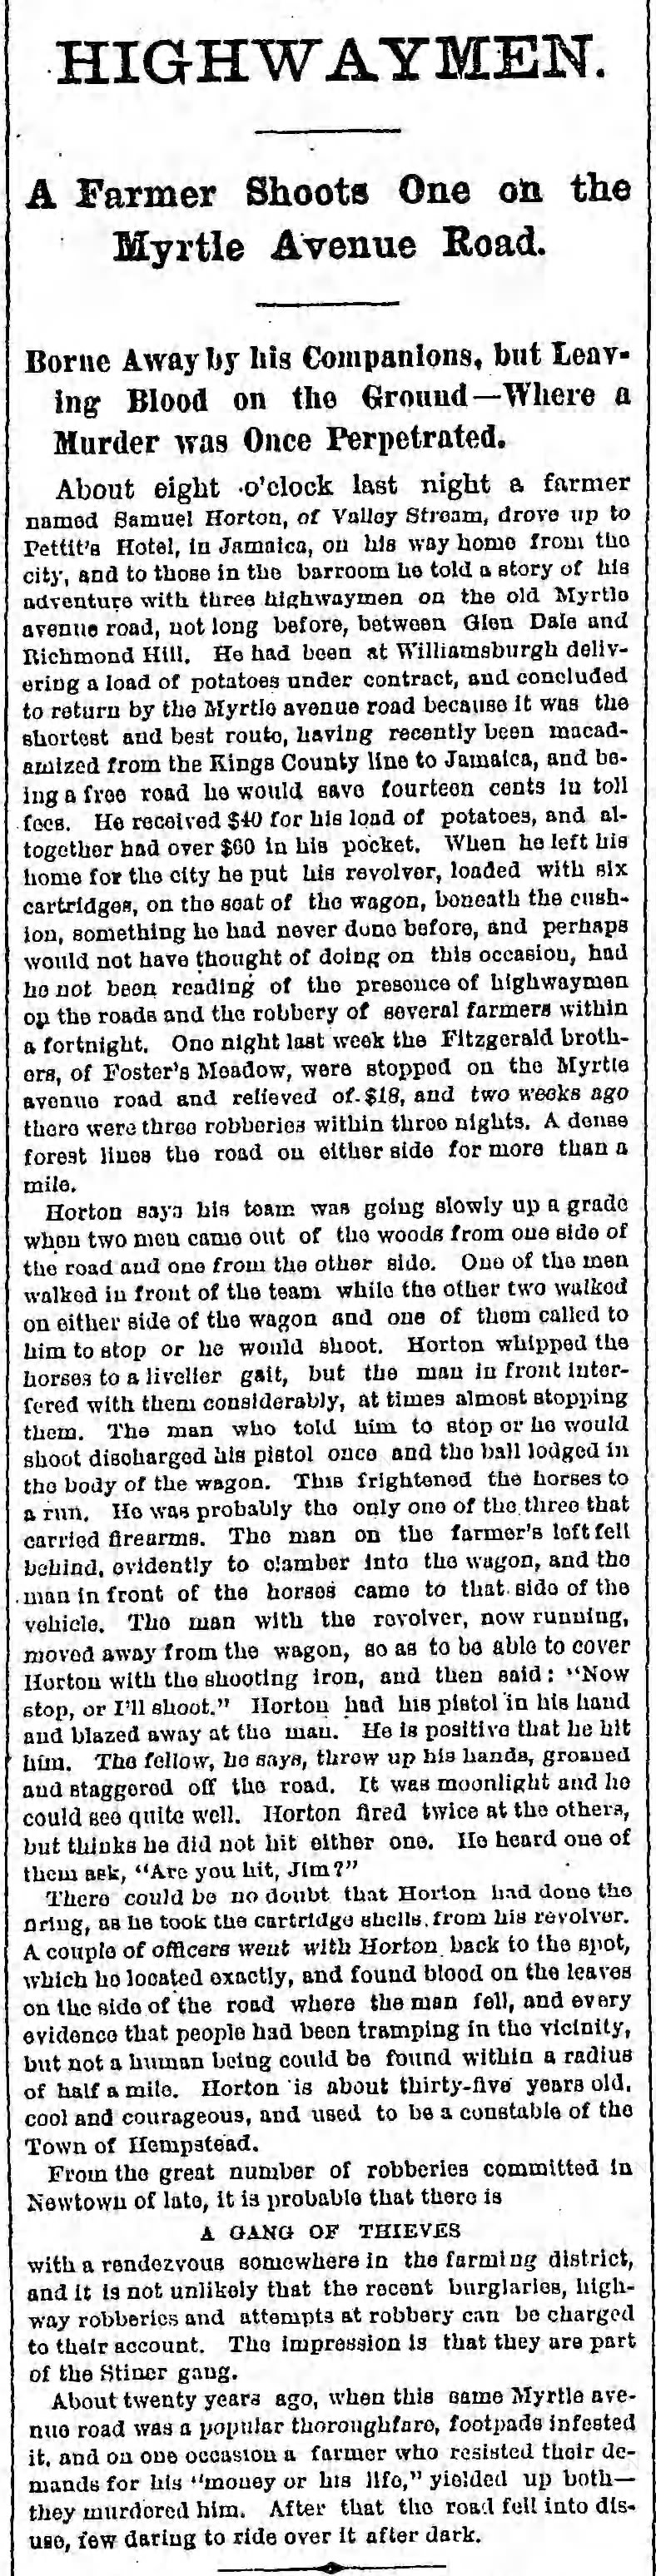 HORTON Samuel farmer of Valley Stream attacked by Highwaymen Daily Eagle 19 Dec 1879  pg 4